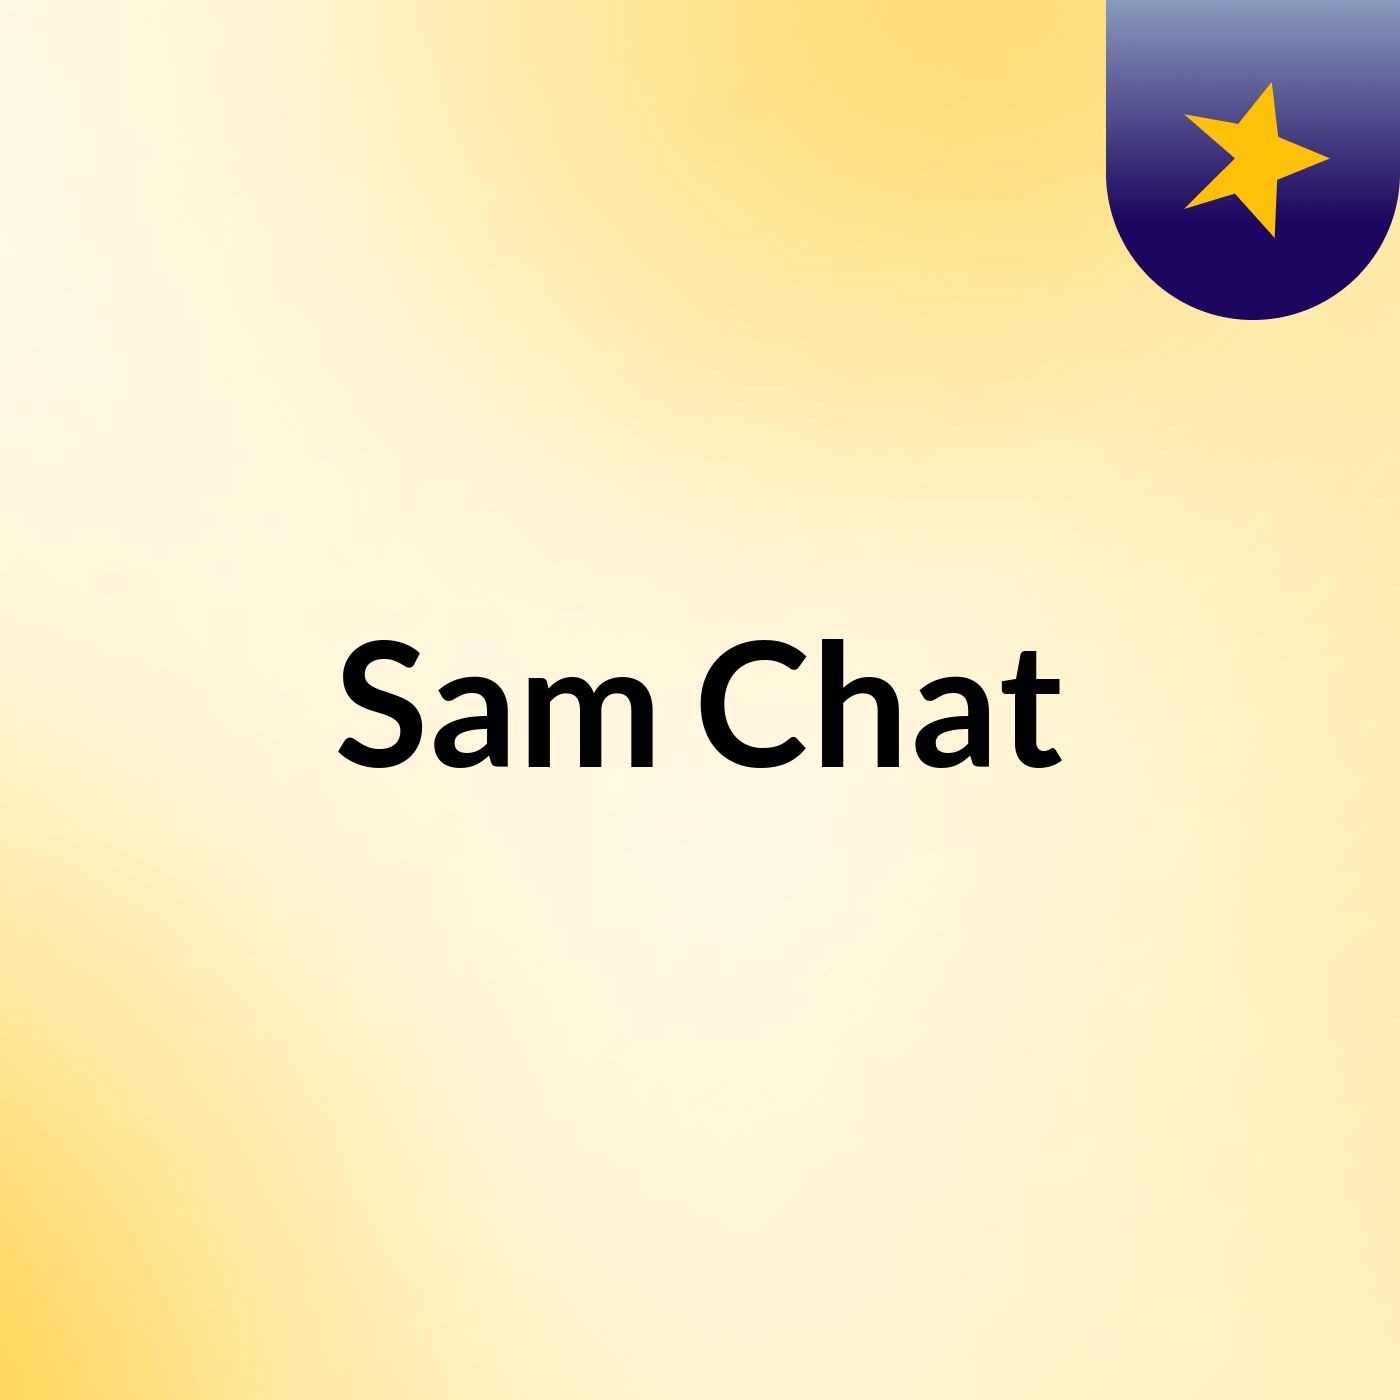 Sam Chat